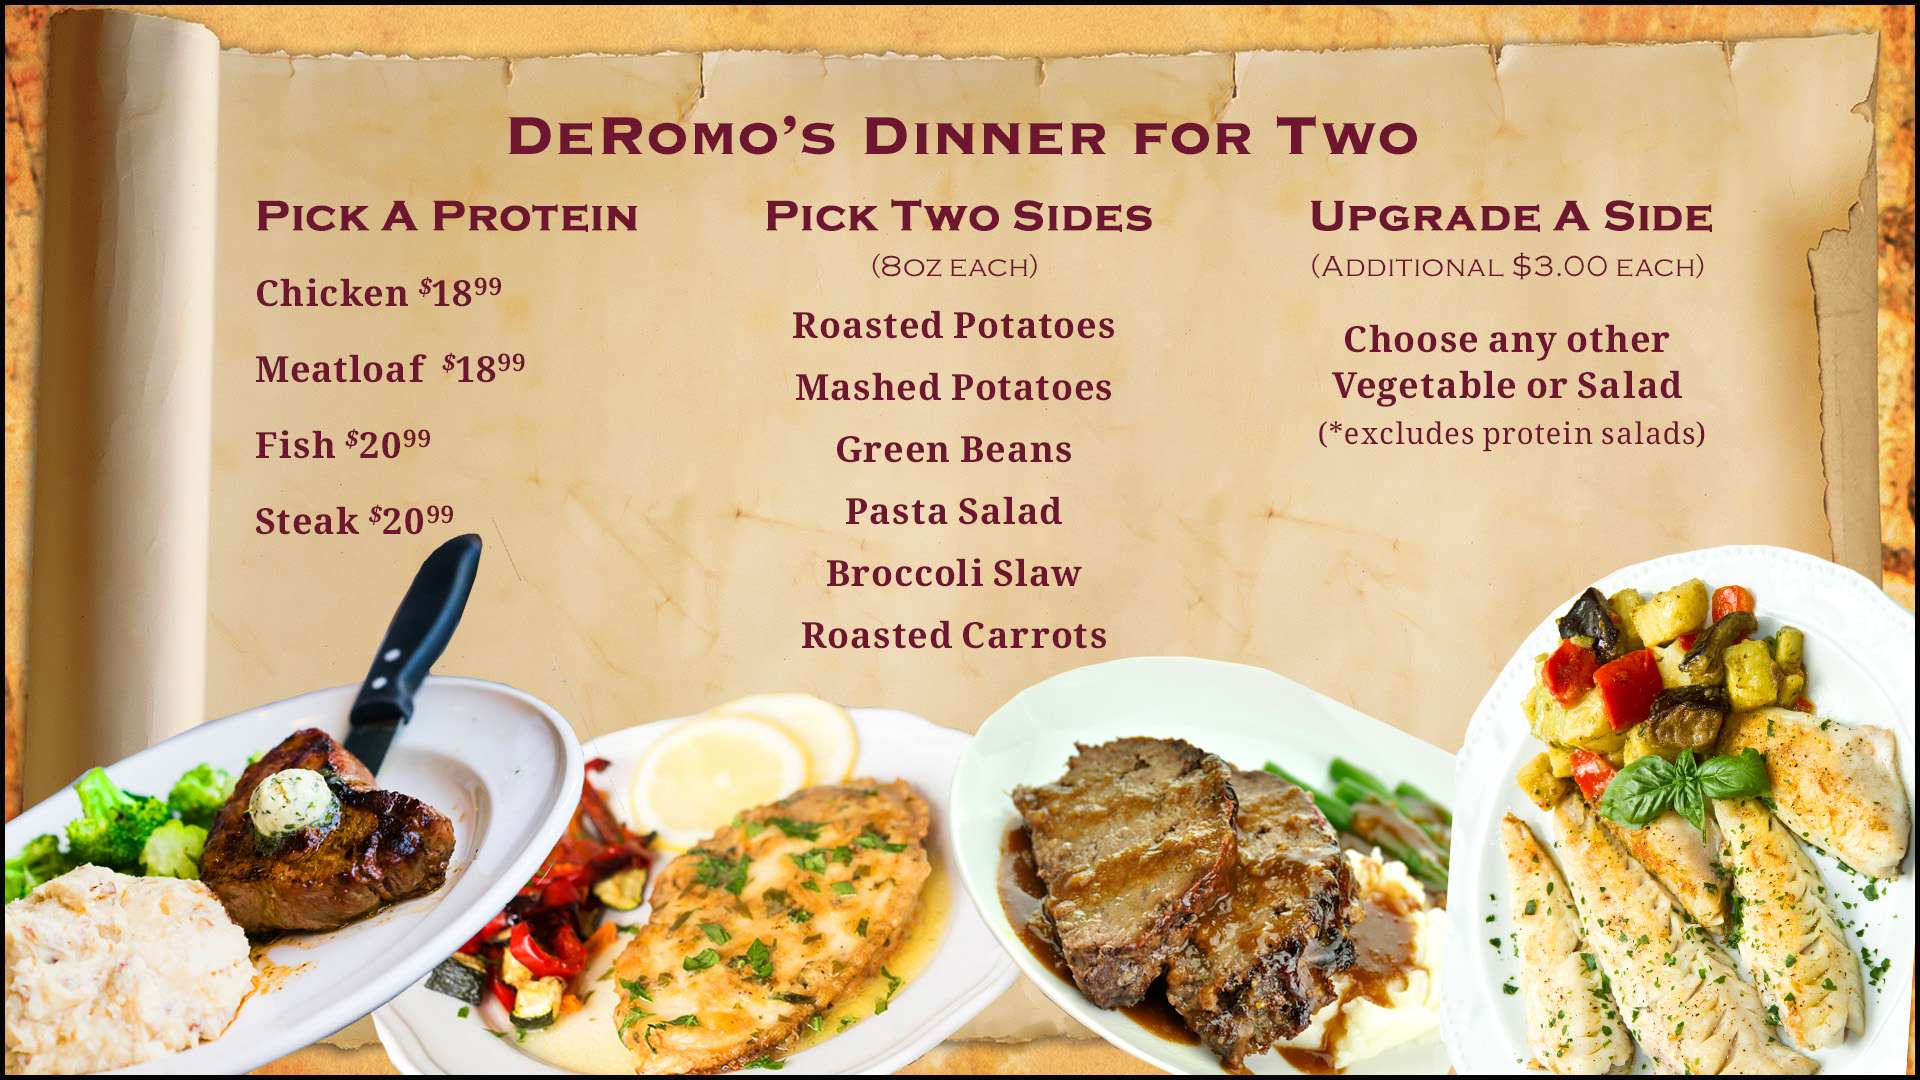 DeRomo's dinner for two menu